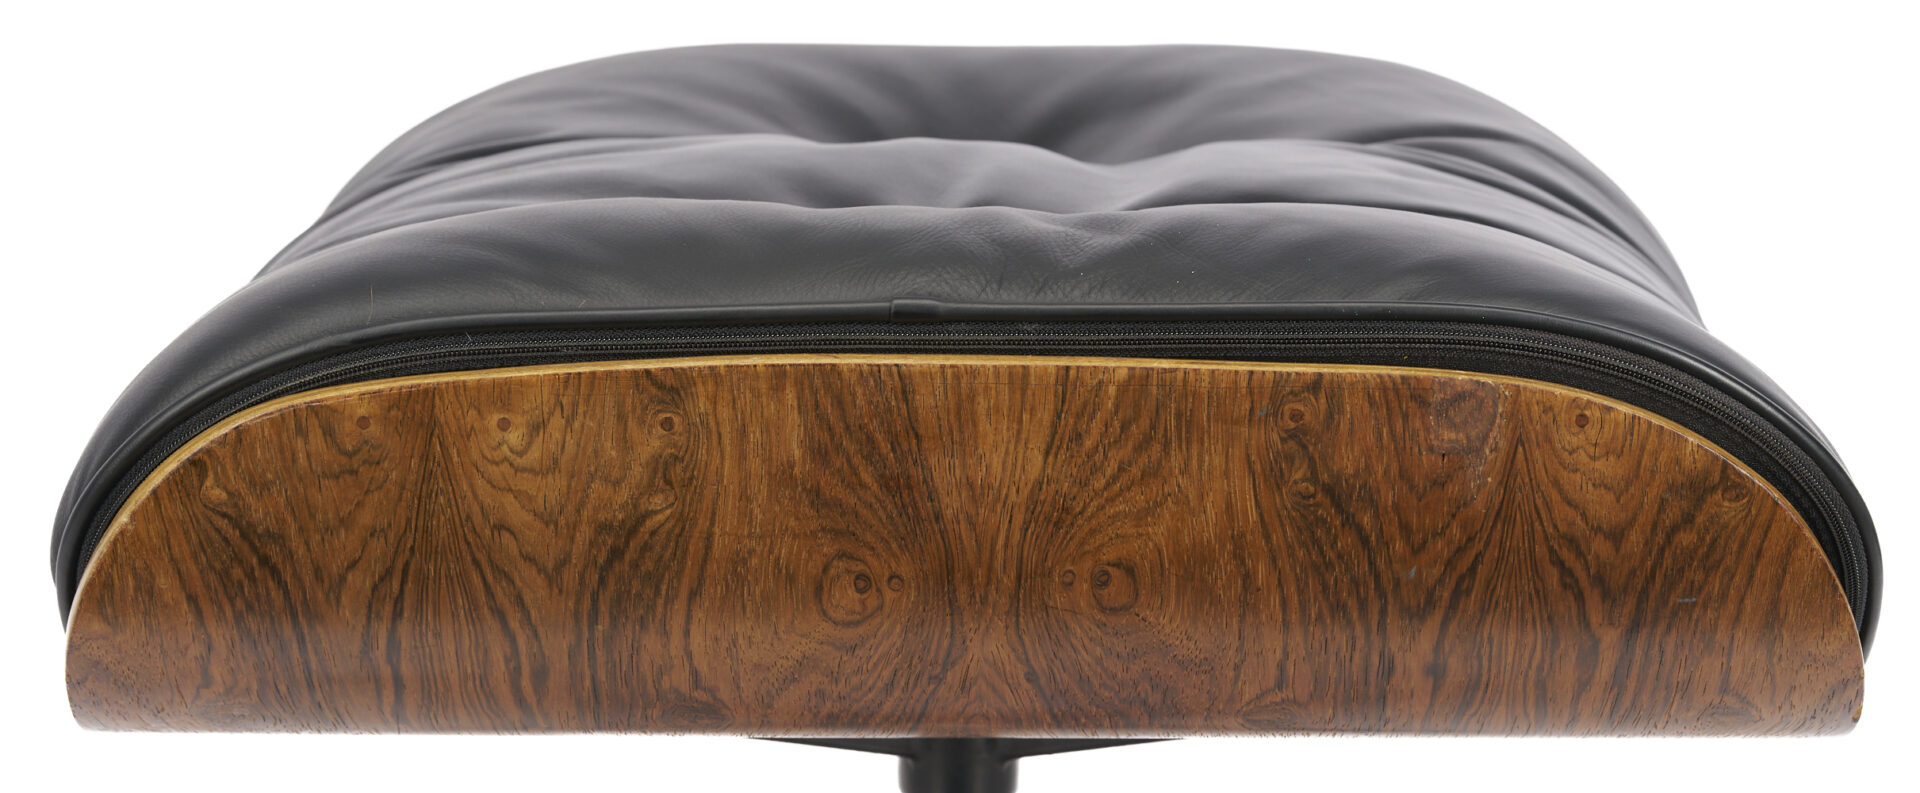 Lot 690: Eames Black Lounge Chair & Ottoman by Herman Miller, Set 2 of 2